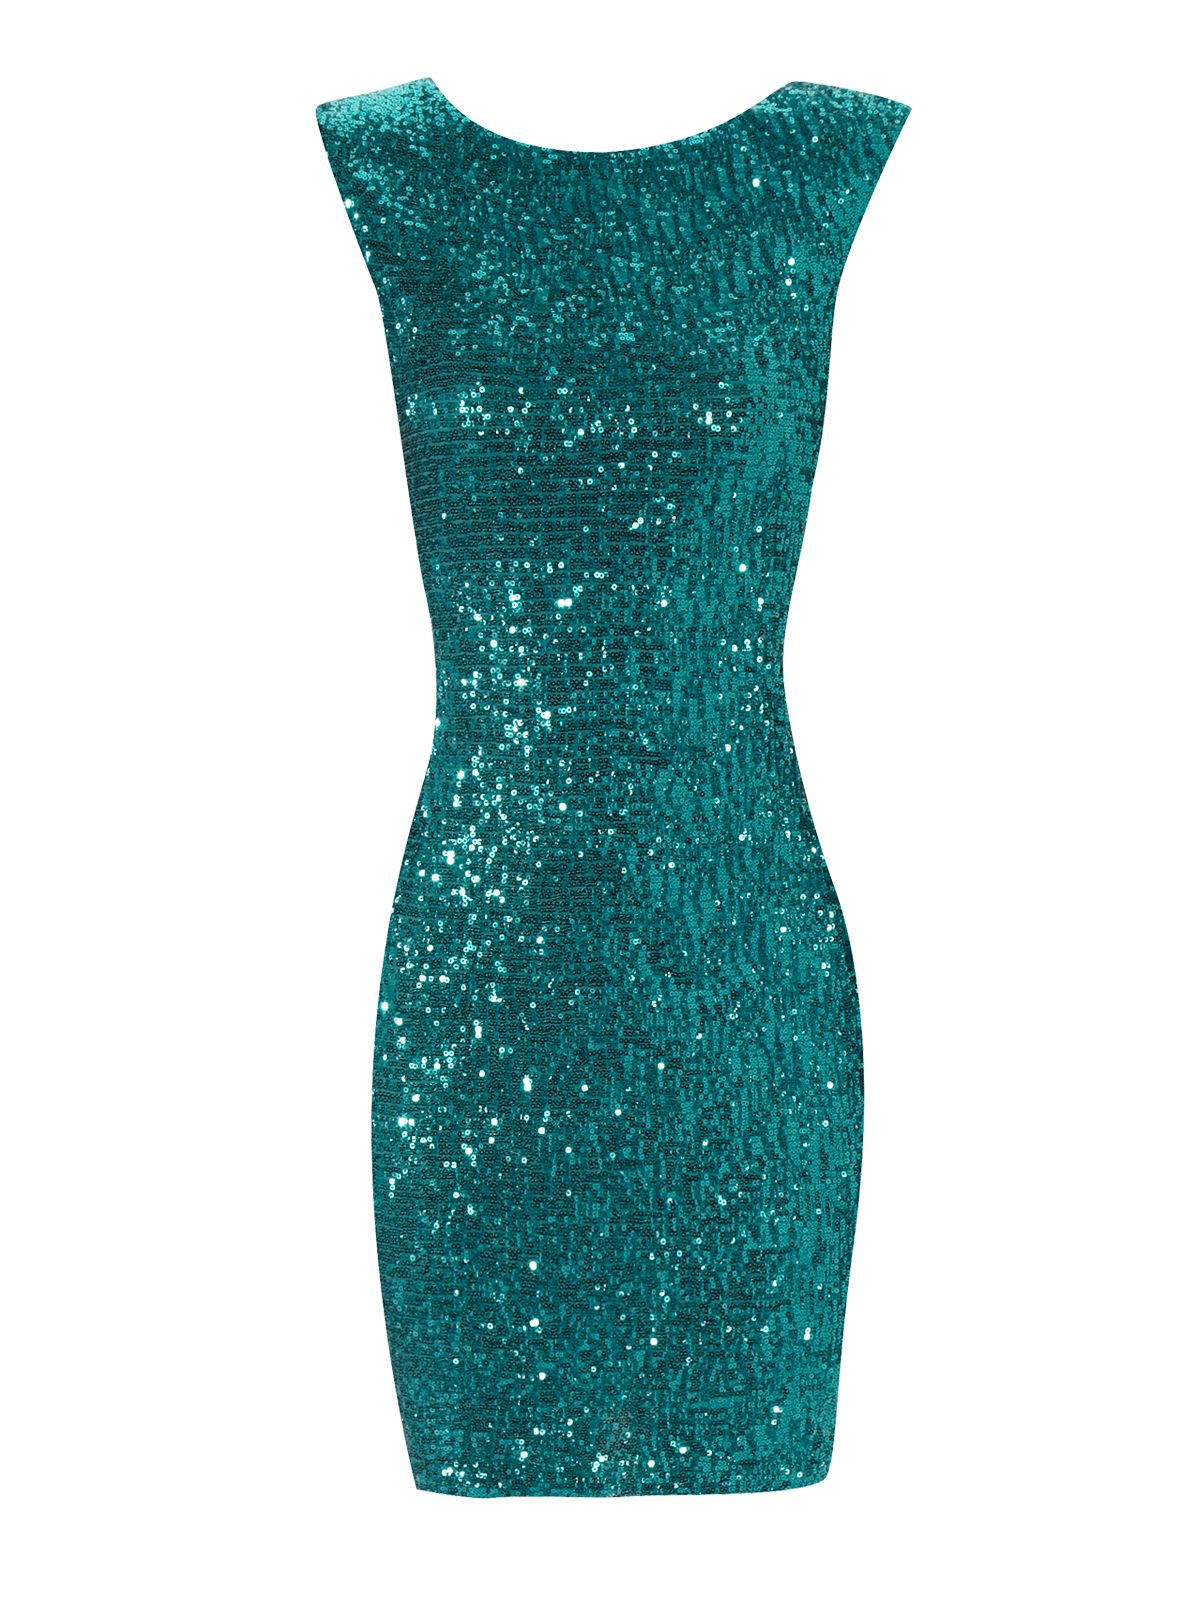 Jane Norman Sequin Dress in Blue (aqua) | Lyst